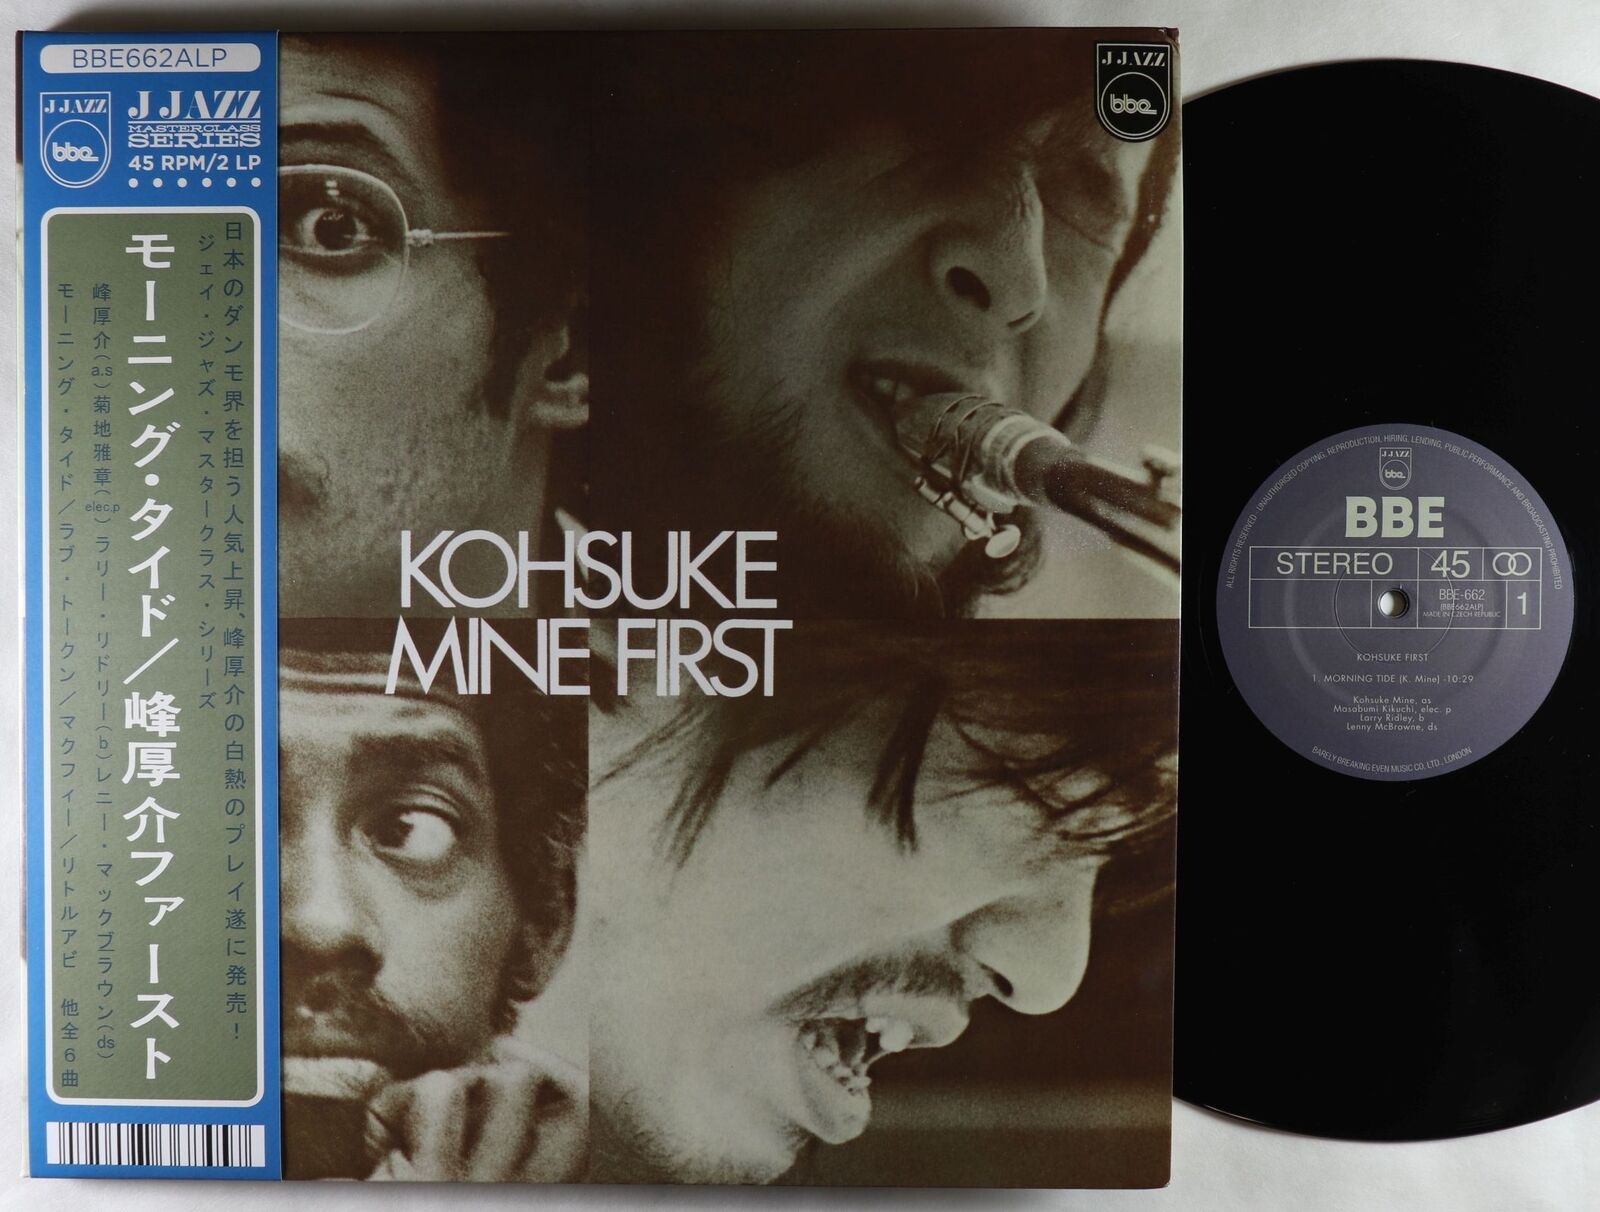 Kohsuke Mine - First 2x12" - BBE Europe Audiophile VG++